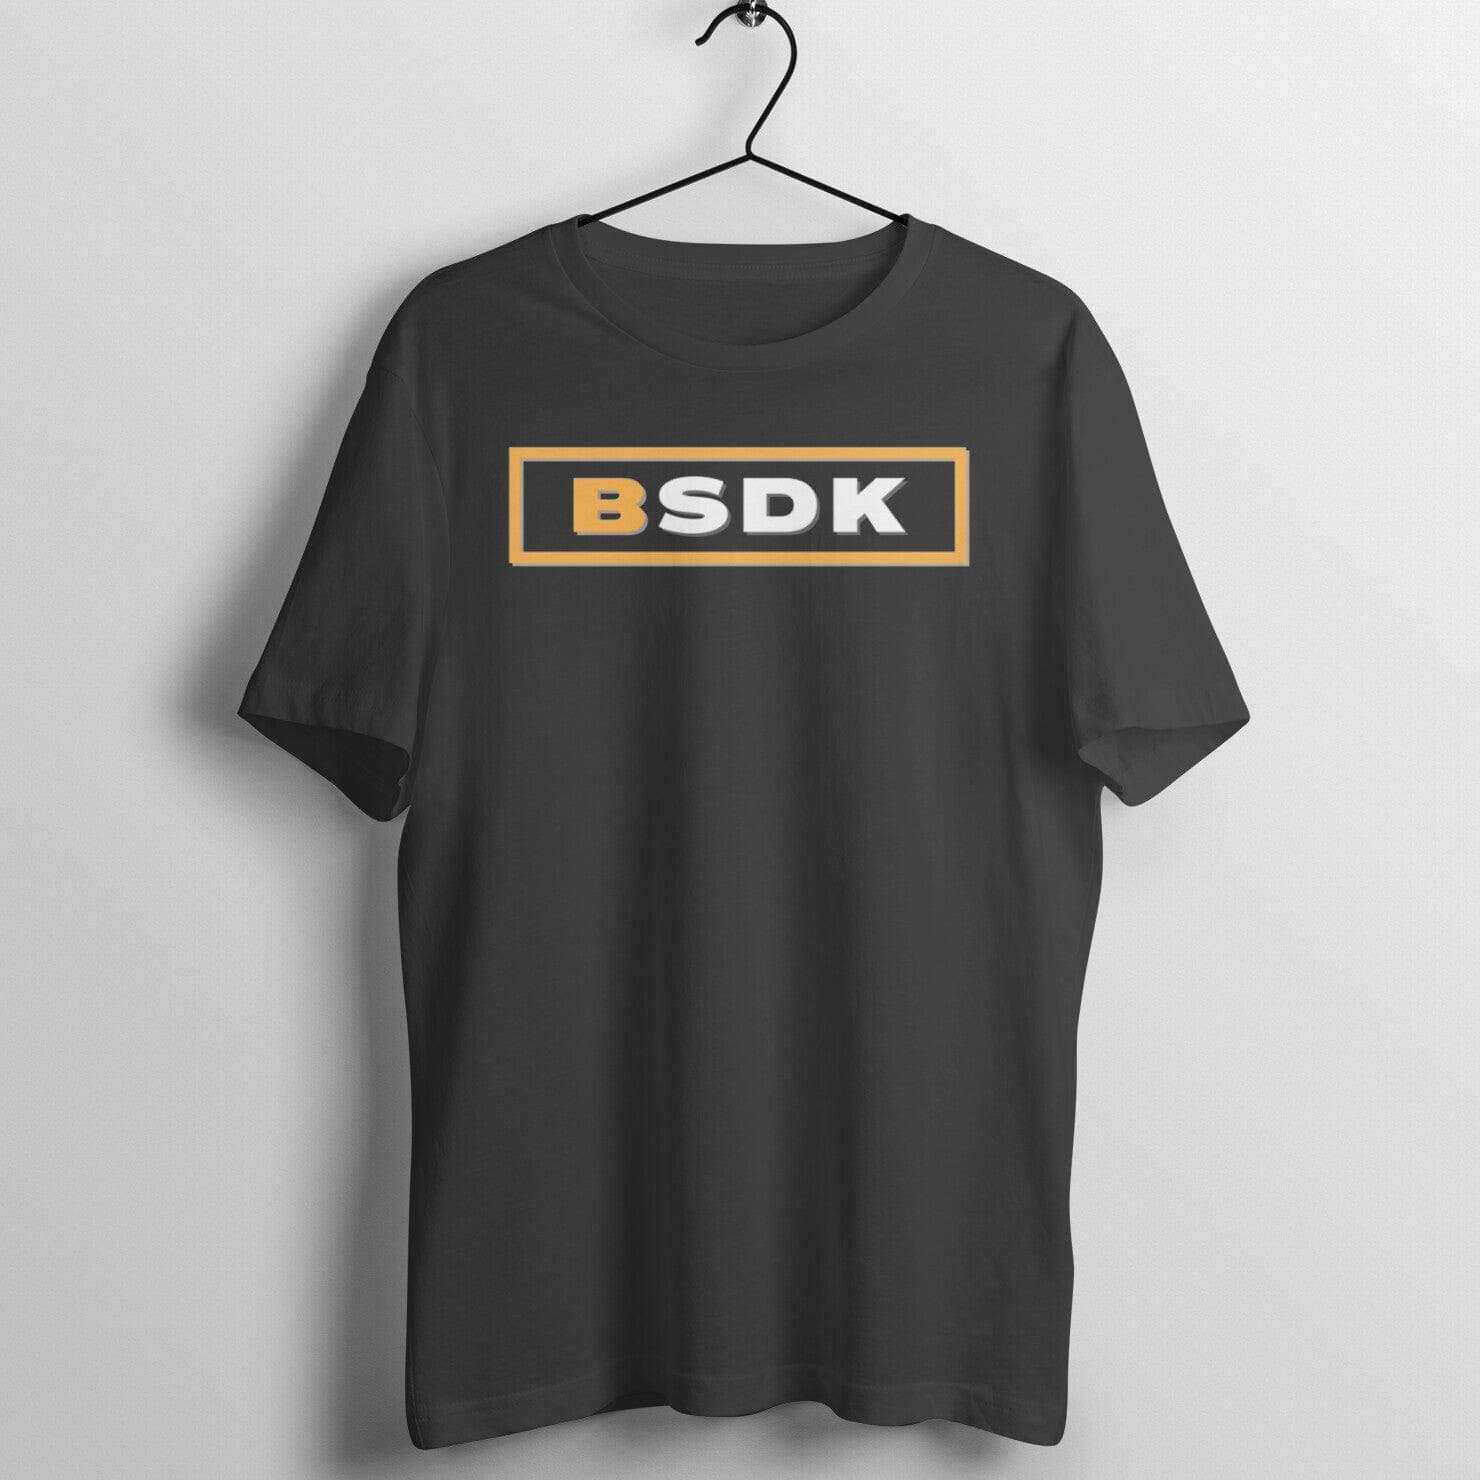 BSDK Funny Black T Shirt for Men and Women Printrove Black S 